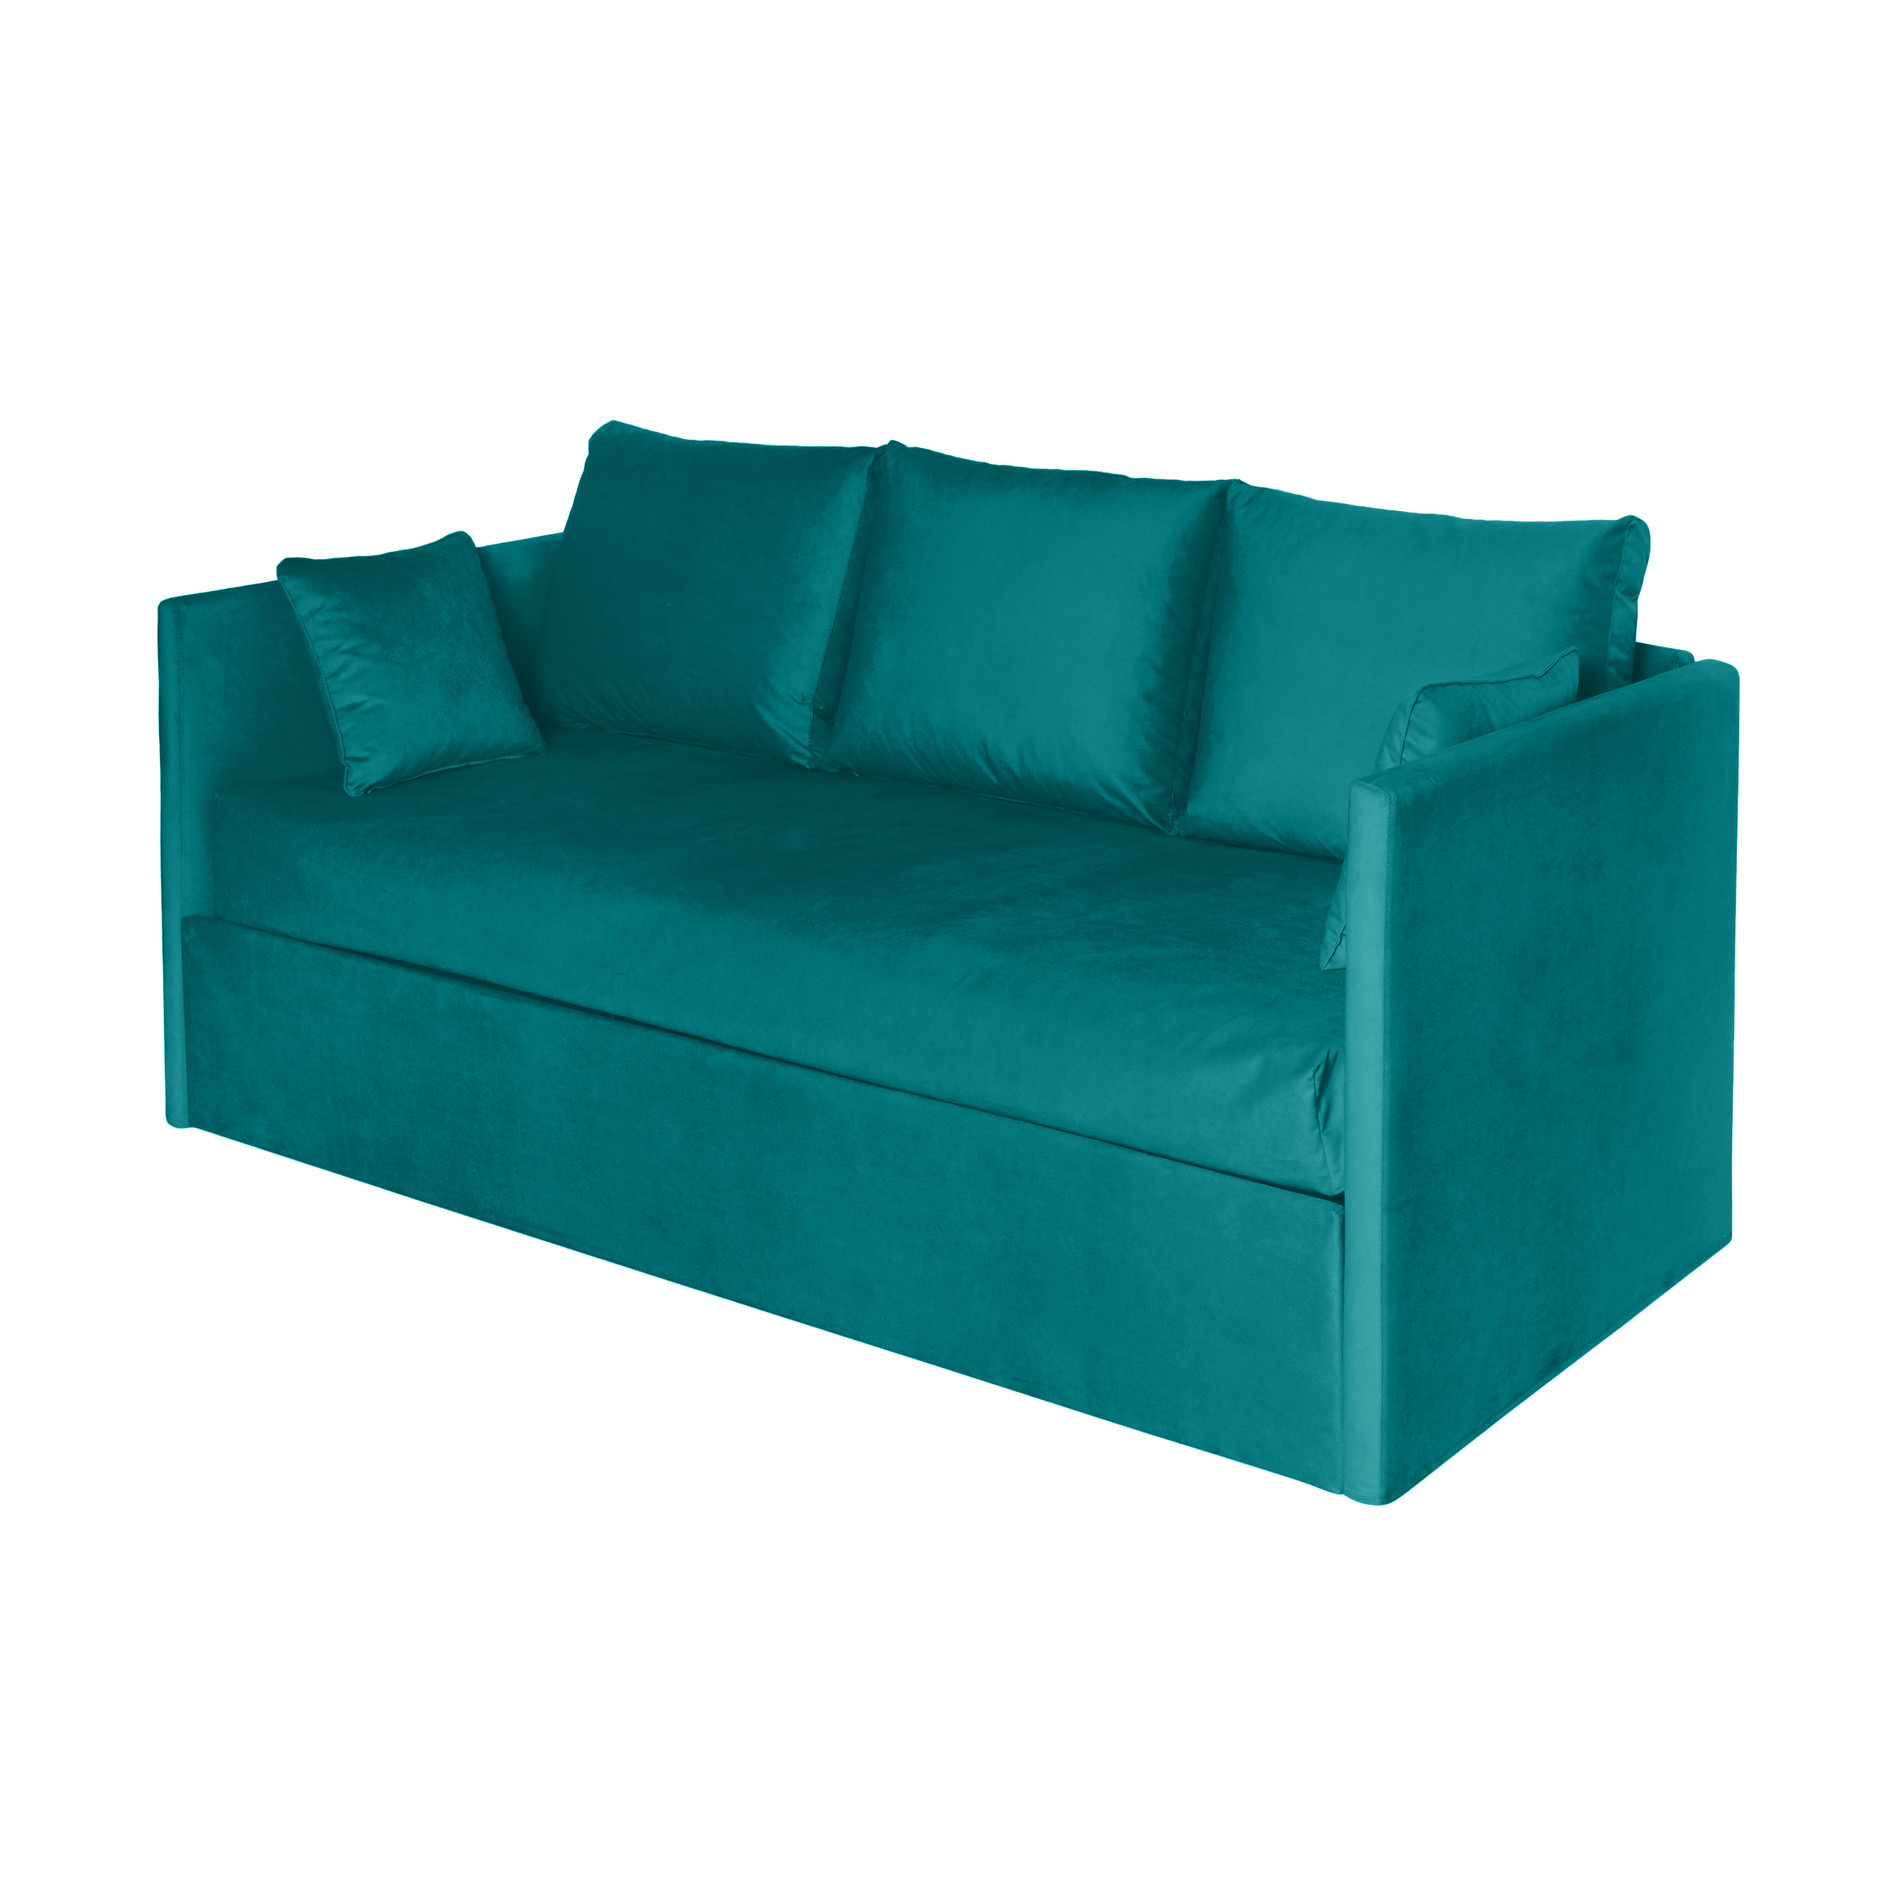 Multi sofa bed, Emerald, large image number 0